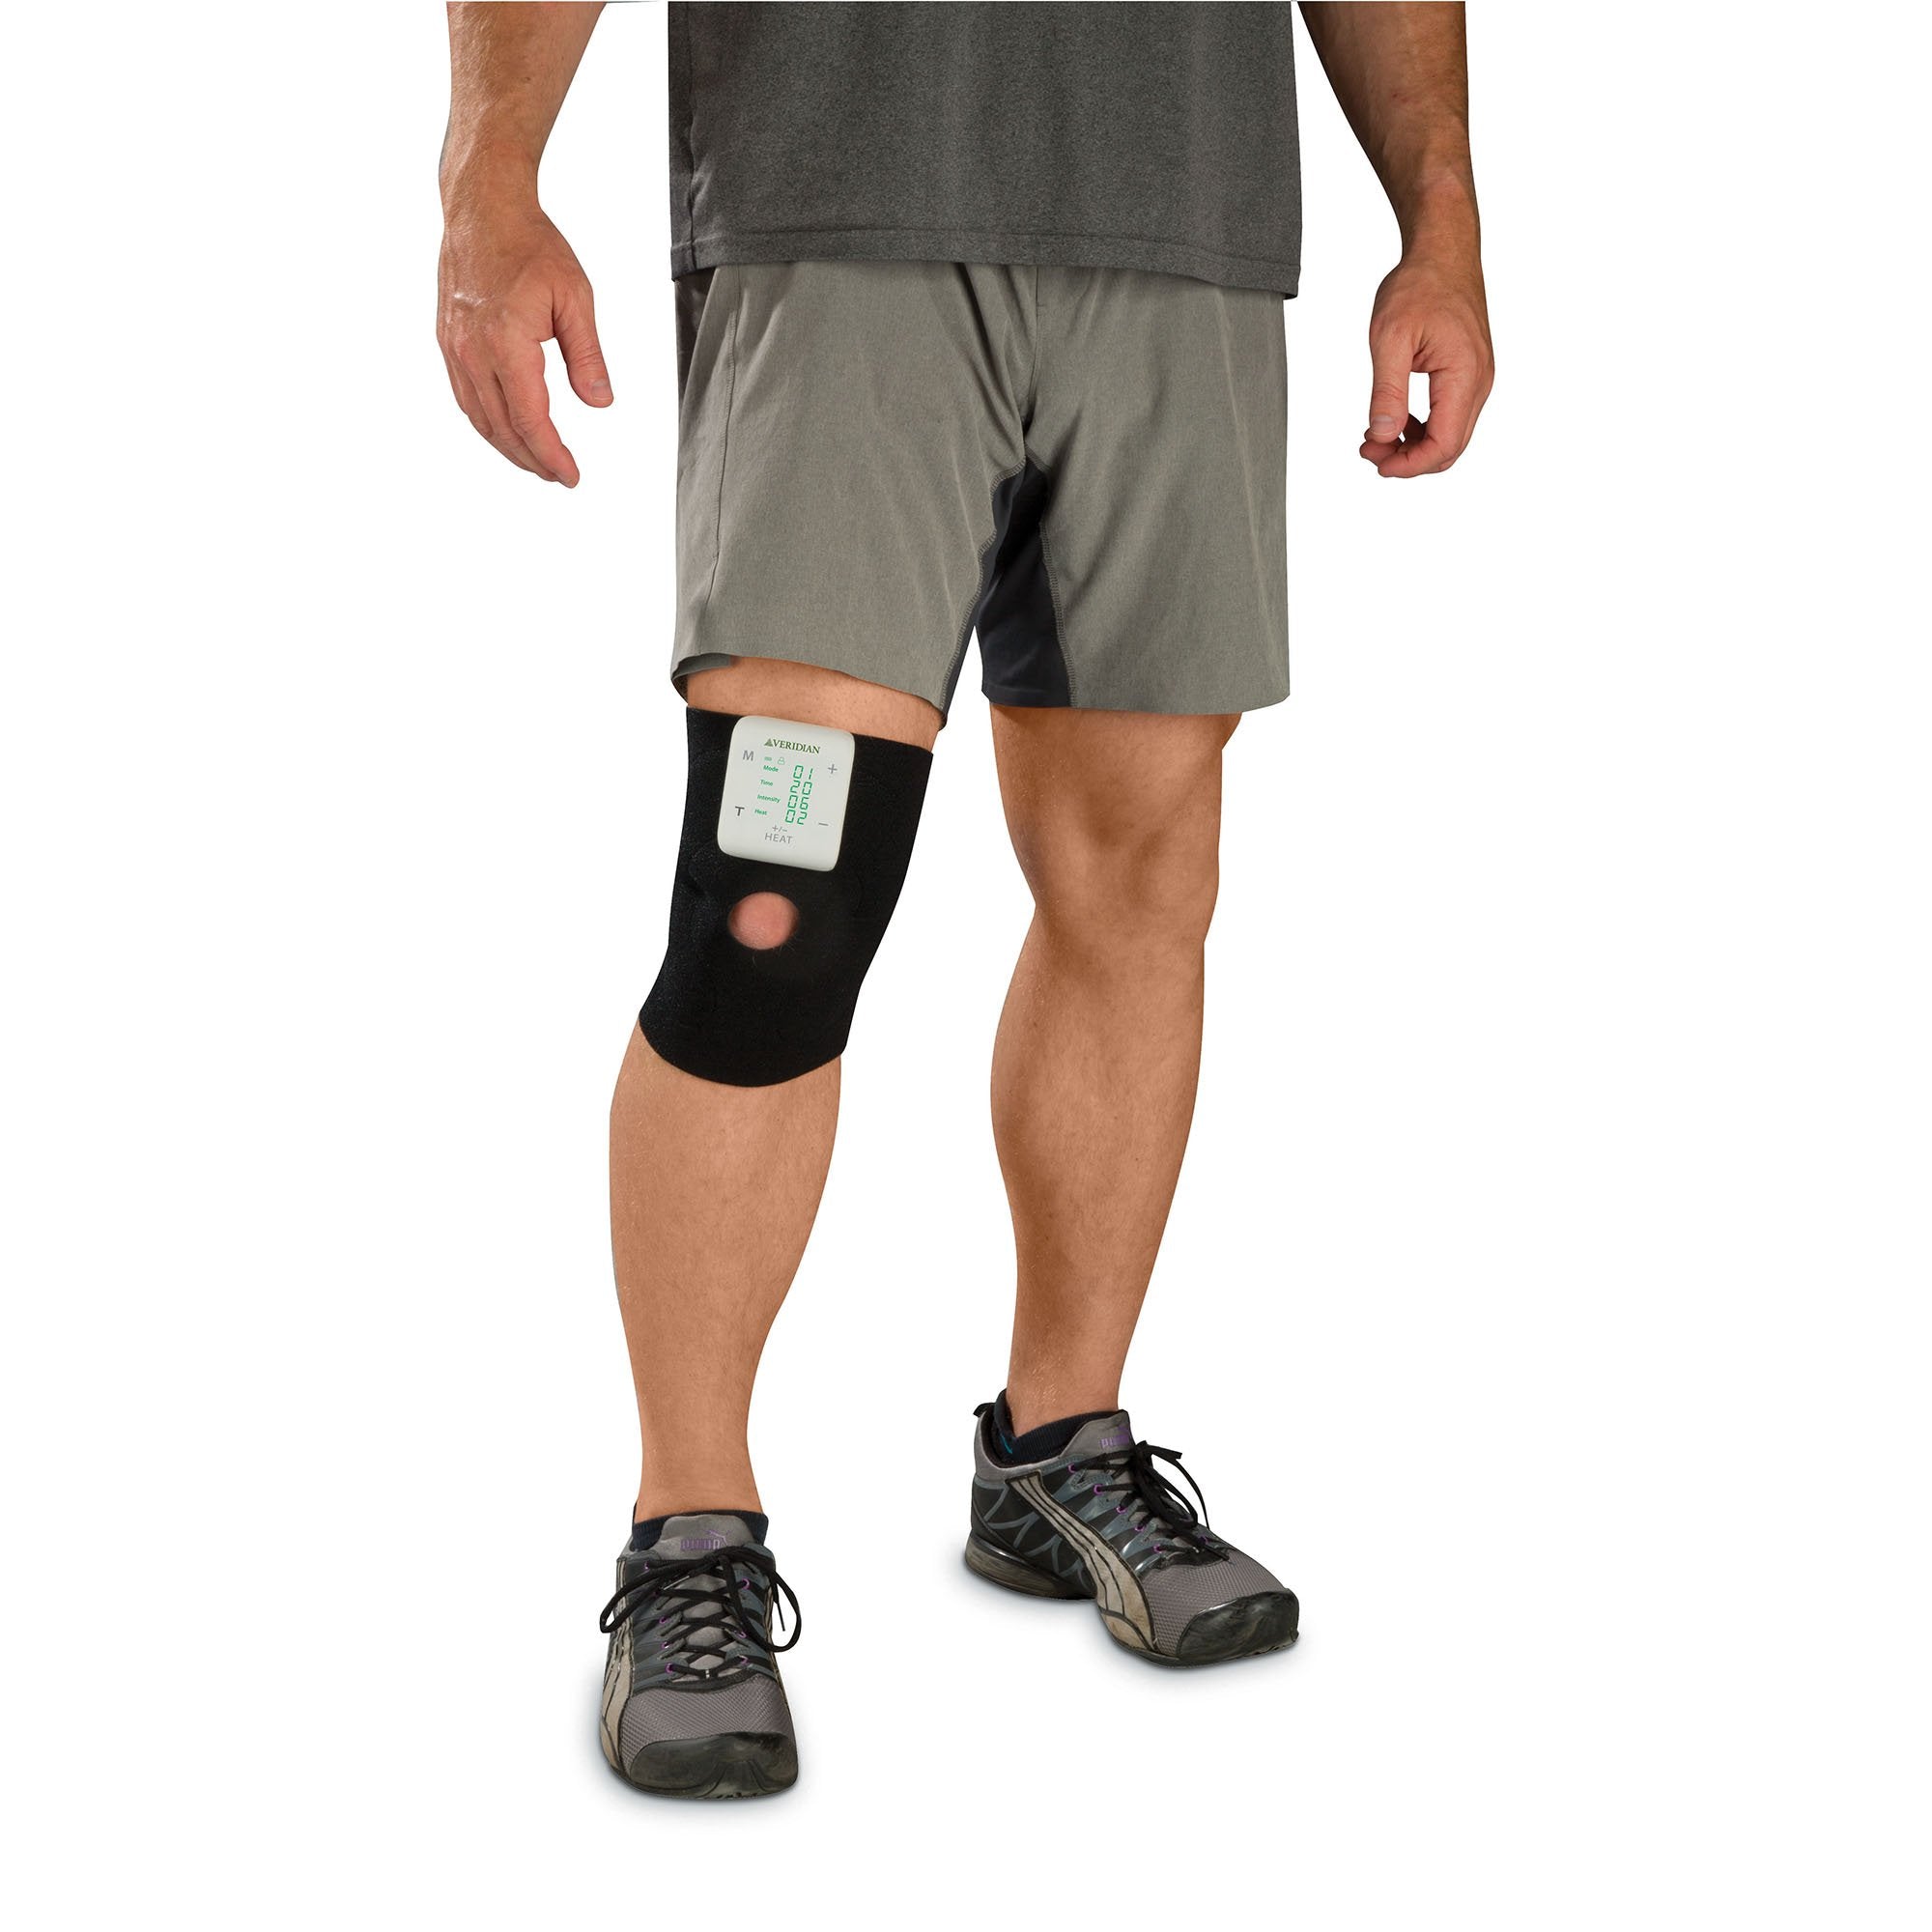 Replacement Heat Conductive Knee Wrap Veridian Healthcare Magnetic Connectors